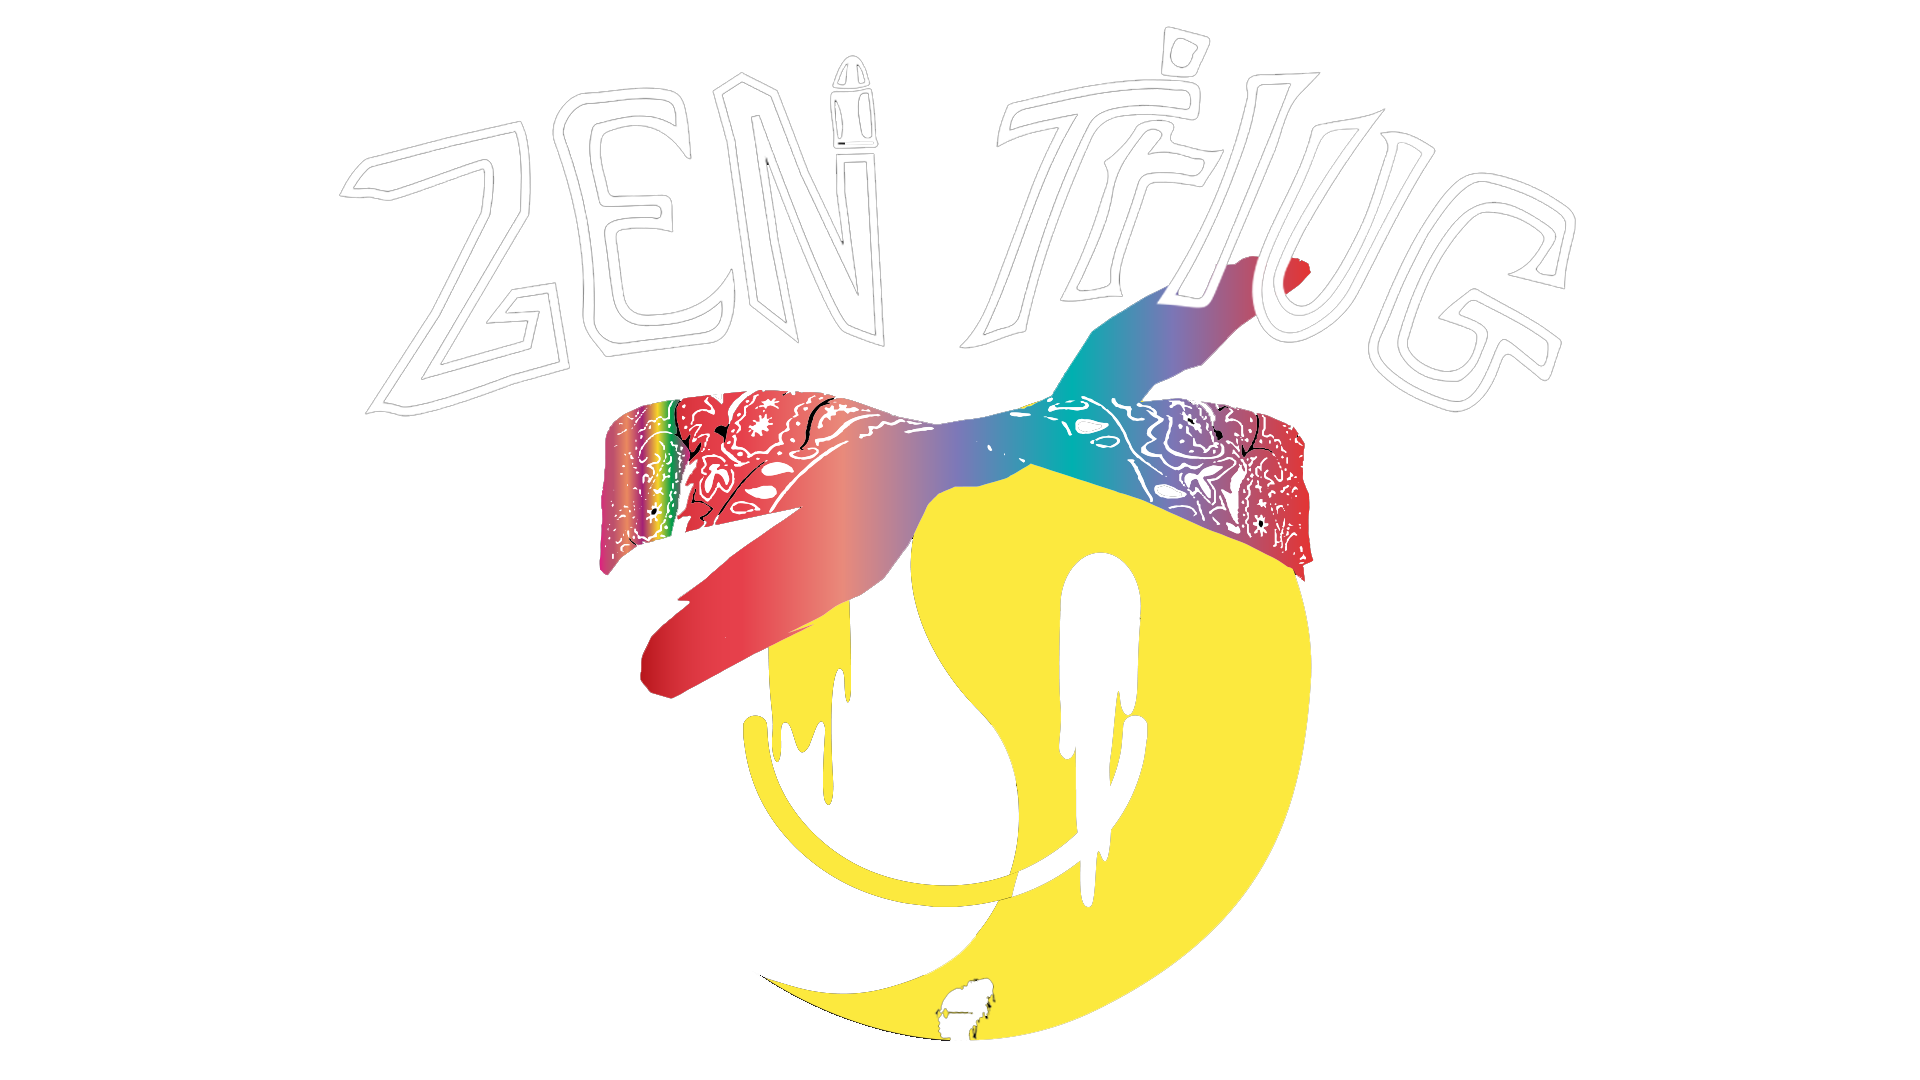 The Zen Thug